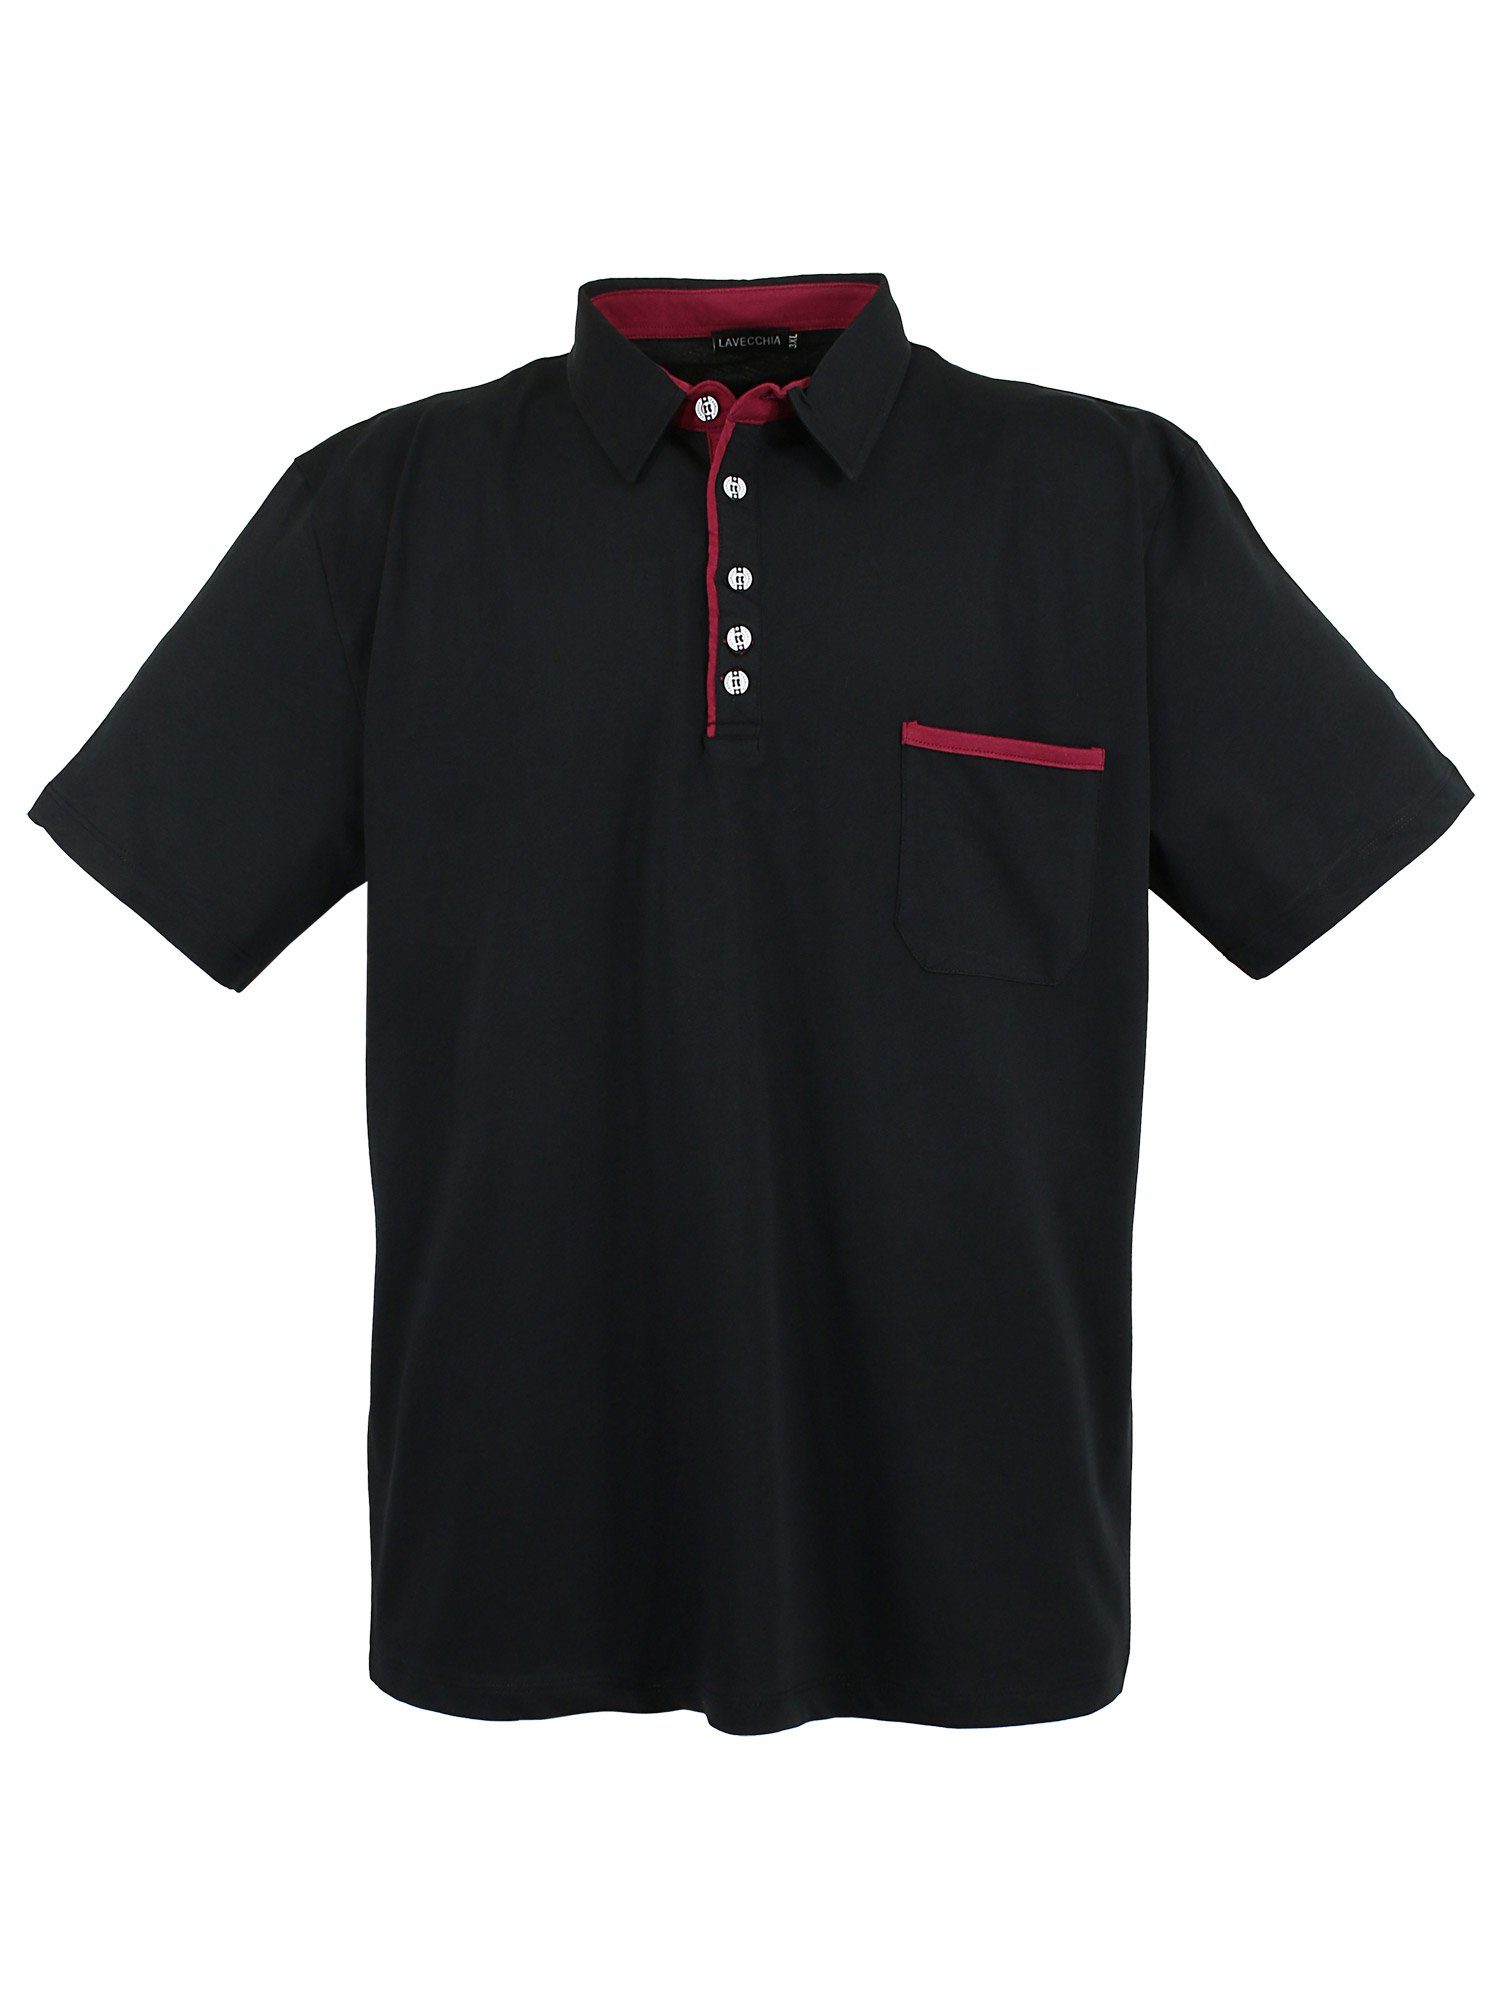 Lavecchia Poloshirt Übergrößen Herren Polo schwarz Herren Shirt LV-1701 Polo Shirt